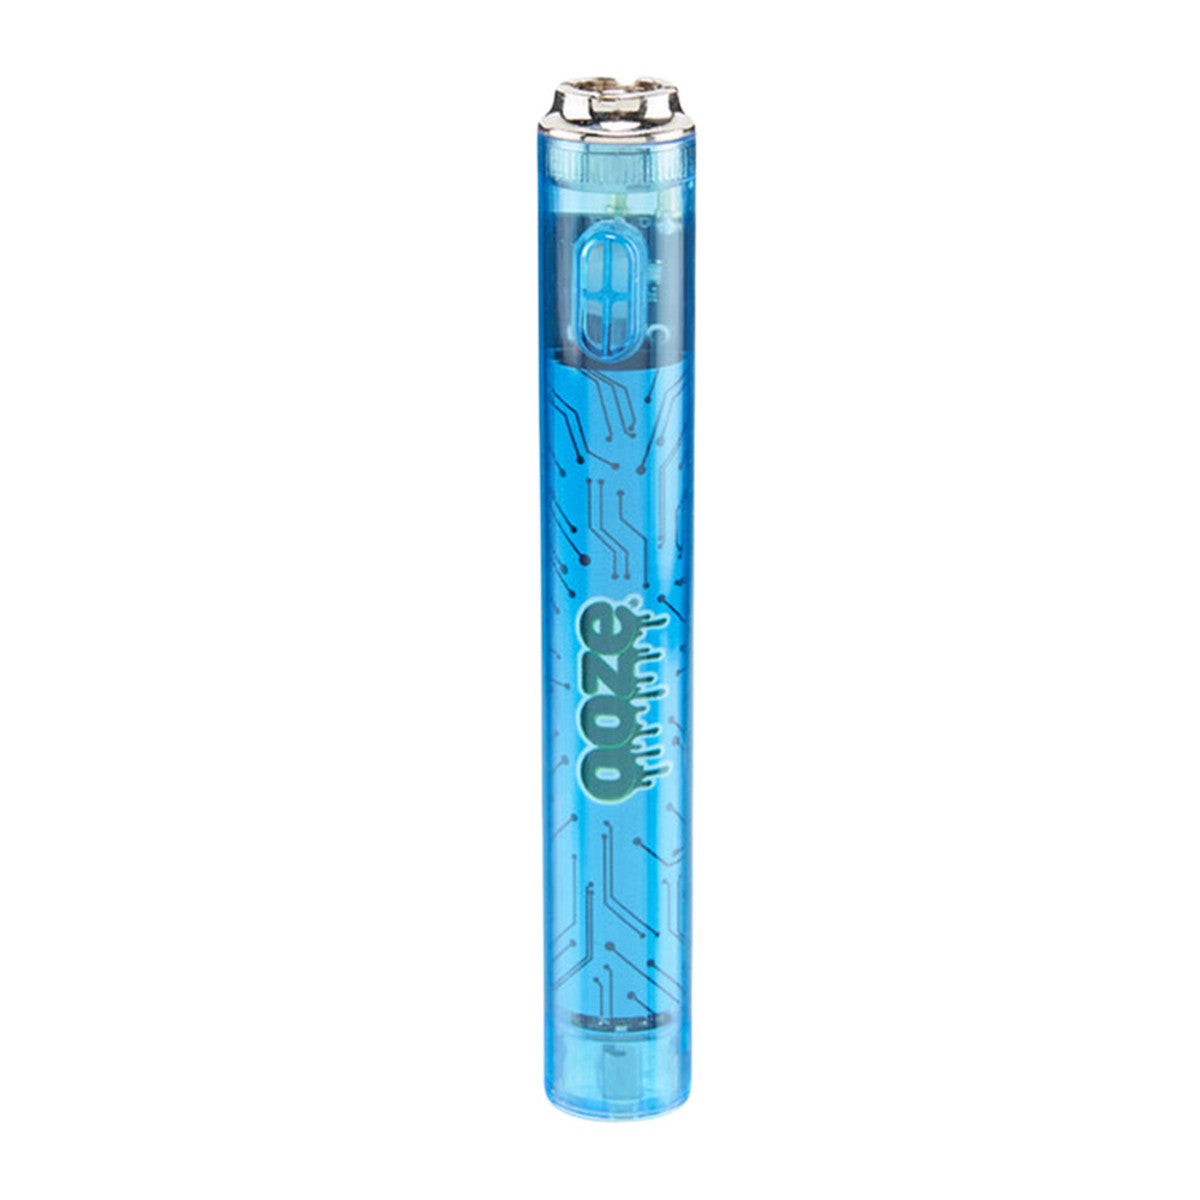 Ooze Slim Clear Series 510 Vape Cartridge Battery Sapphire Blue